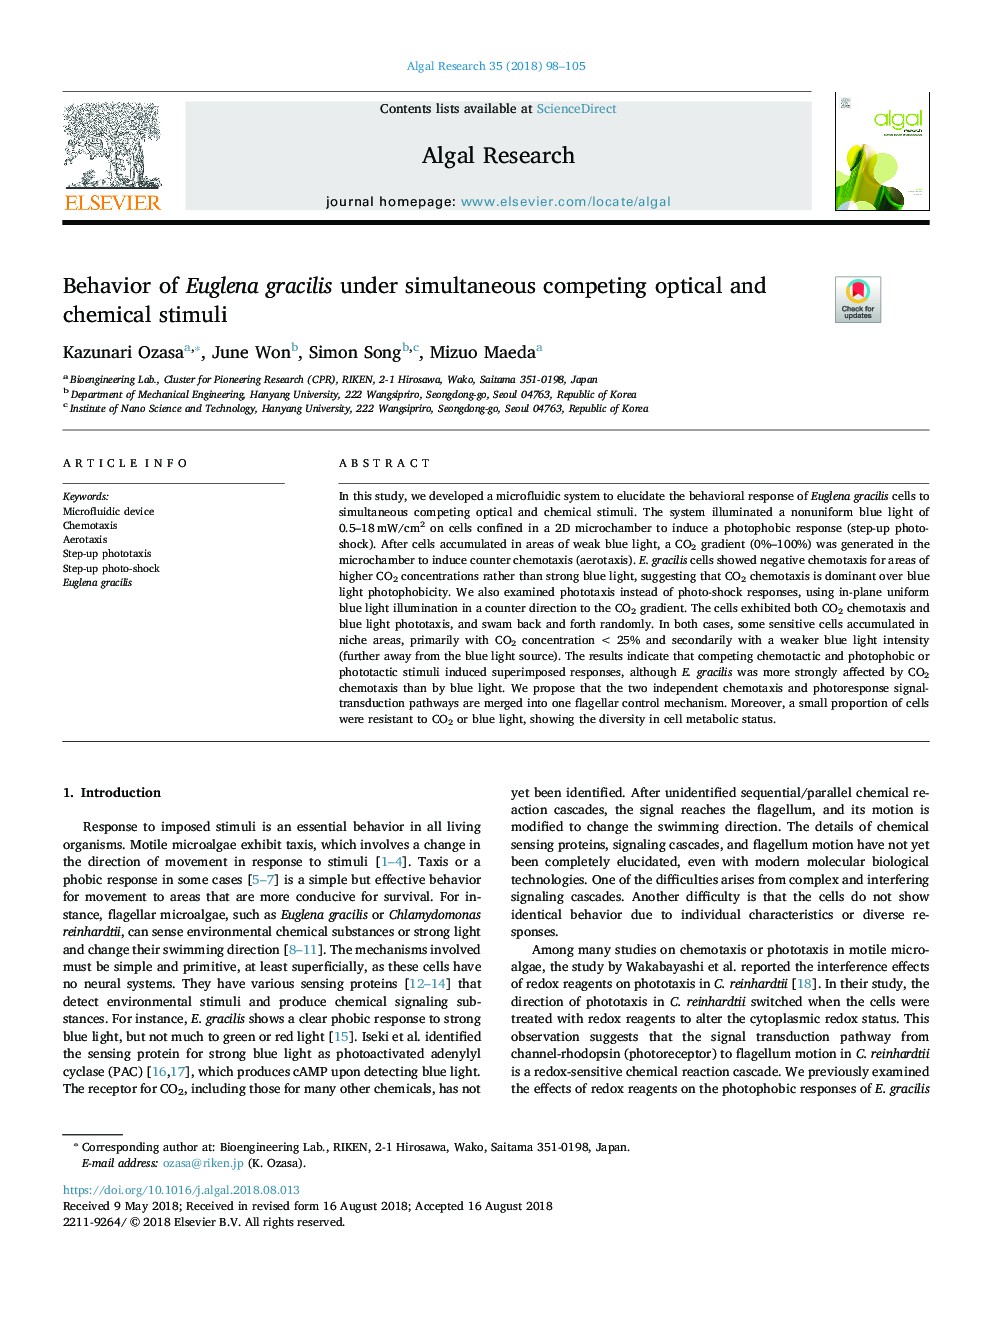 Behavior of Euglena gracilis under simultaneous competing optical and chemical stimuli